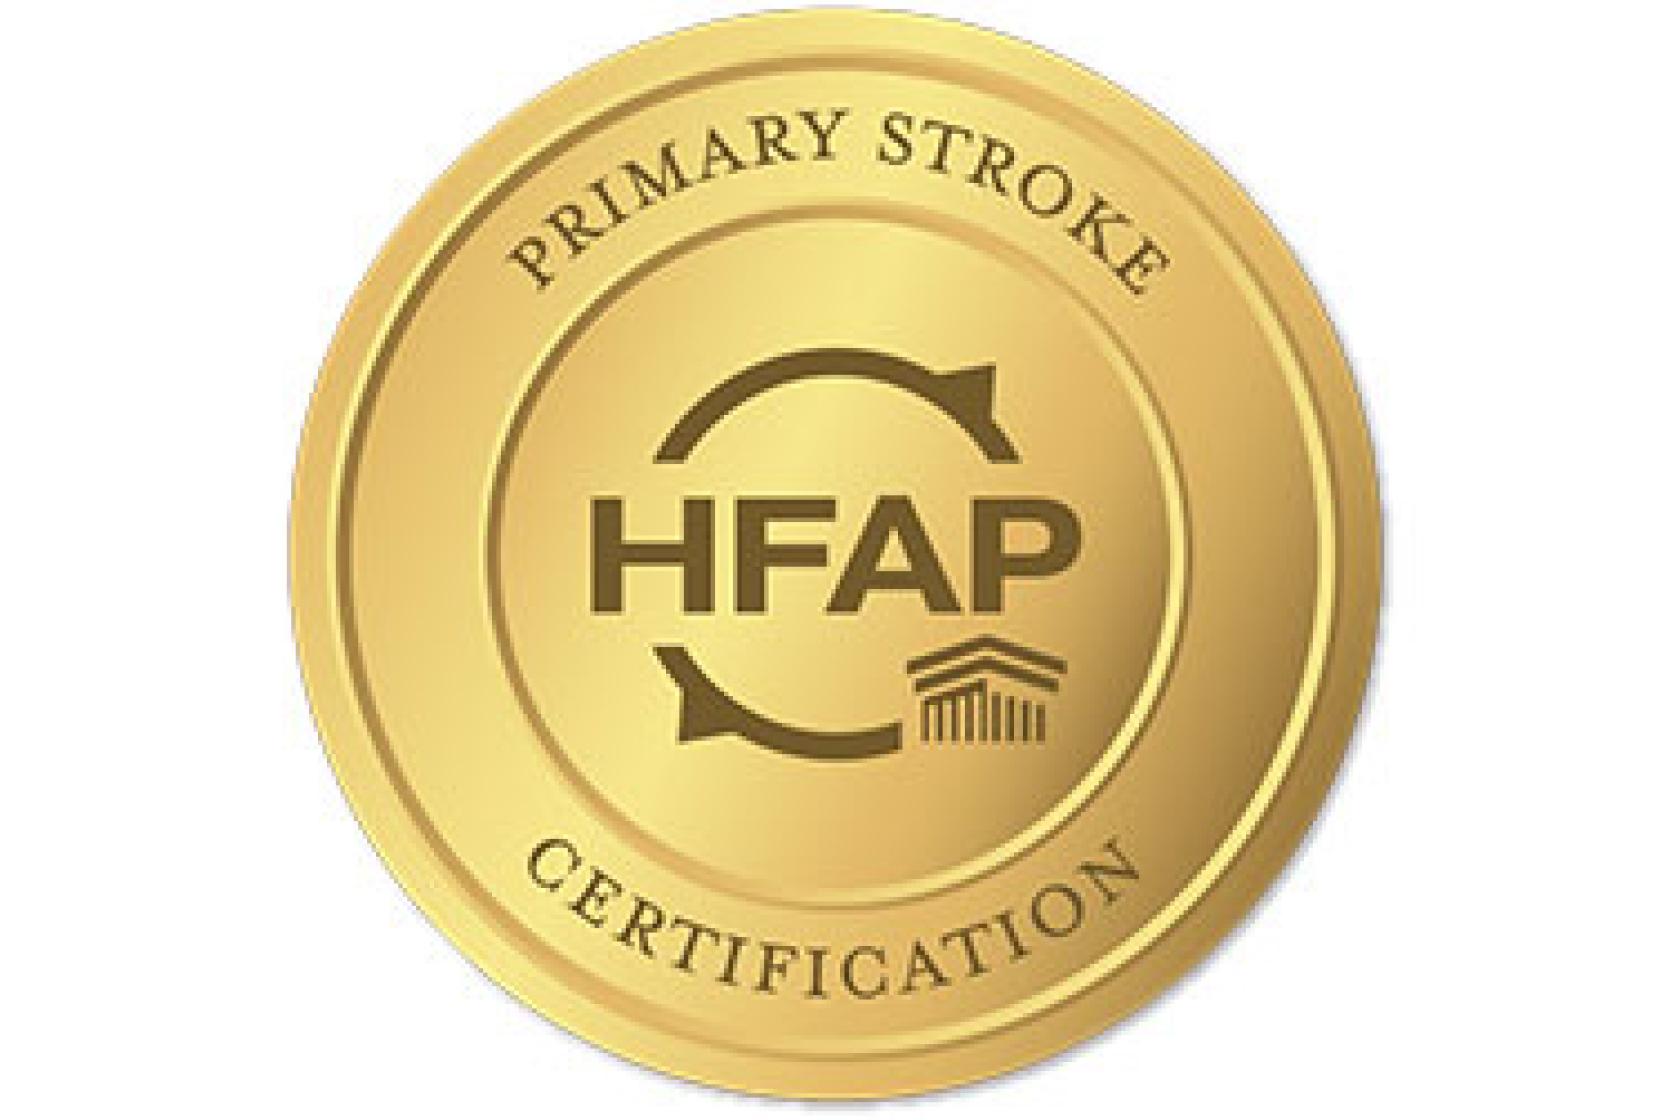 Primary Stroke Certification 2021